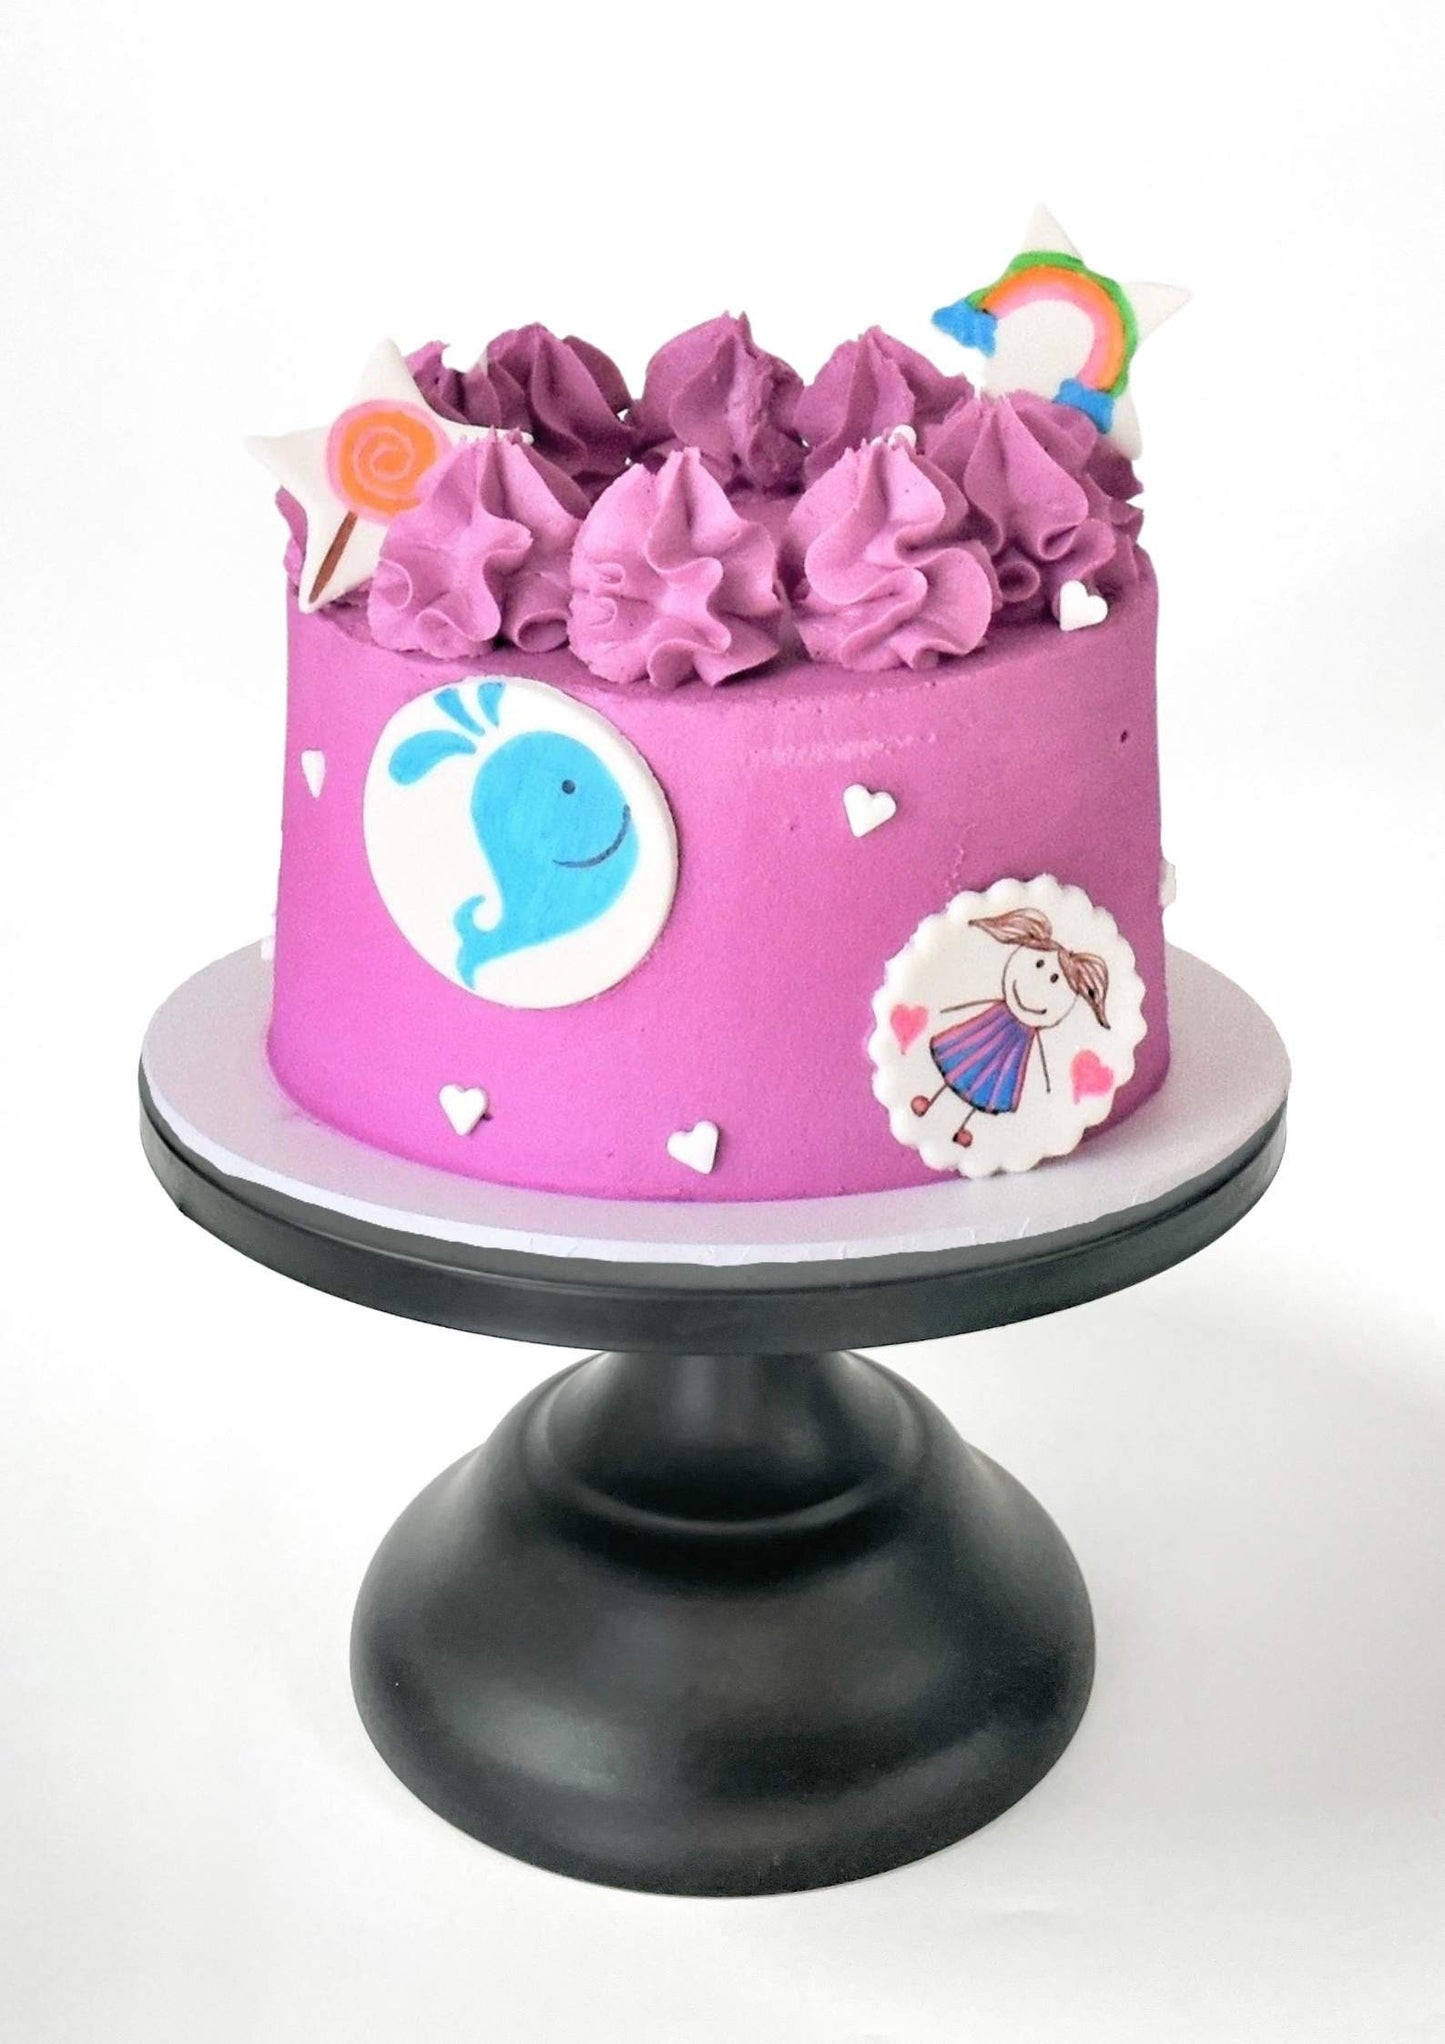 Sugar Art DIY Cake Kit, Draw On Cake, Cake Art, Artistic Cake, Children's Cake Activity, Children's Baking, Personalised Cake, Make it your own cake, Cookie Cutters, Edible Food Pens, Fondant Plaques Cake Edit alt text